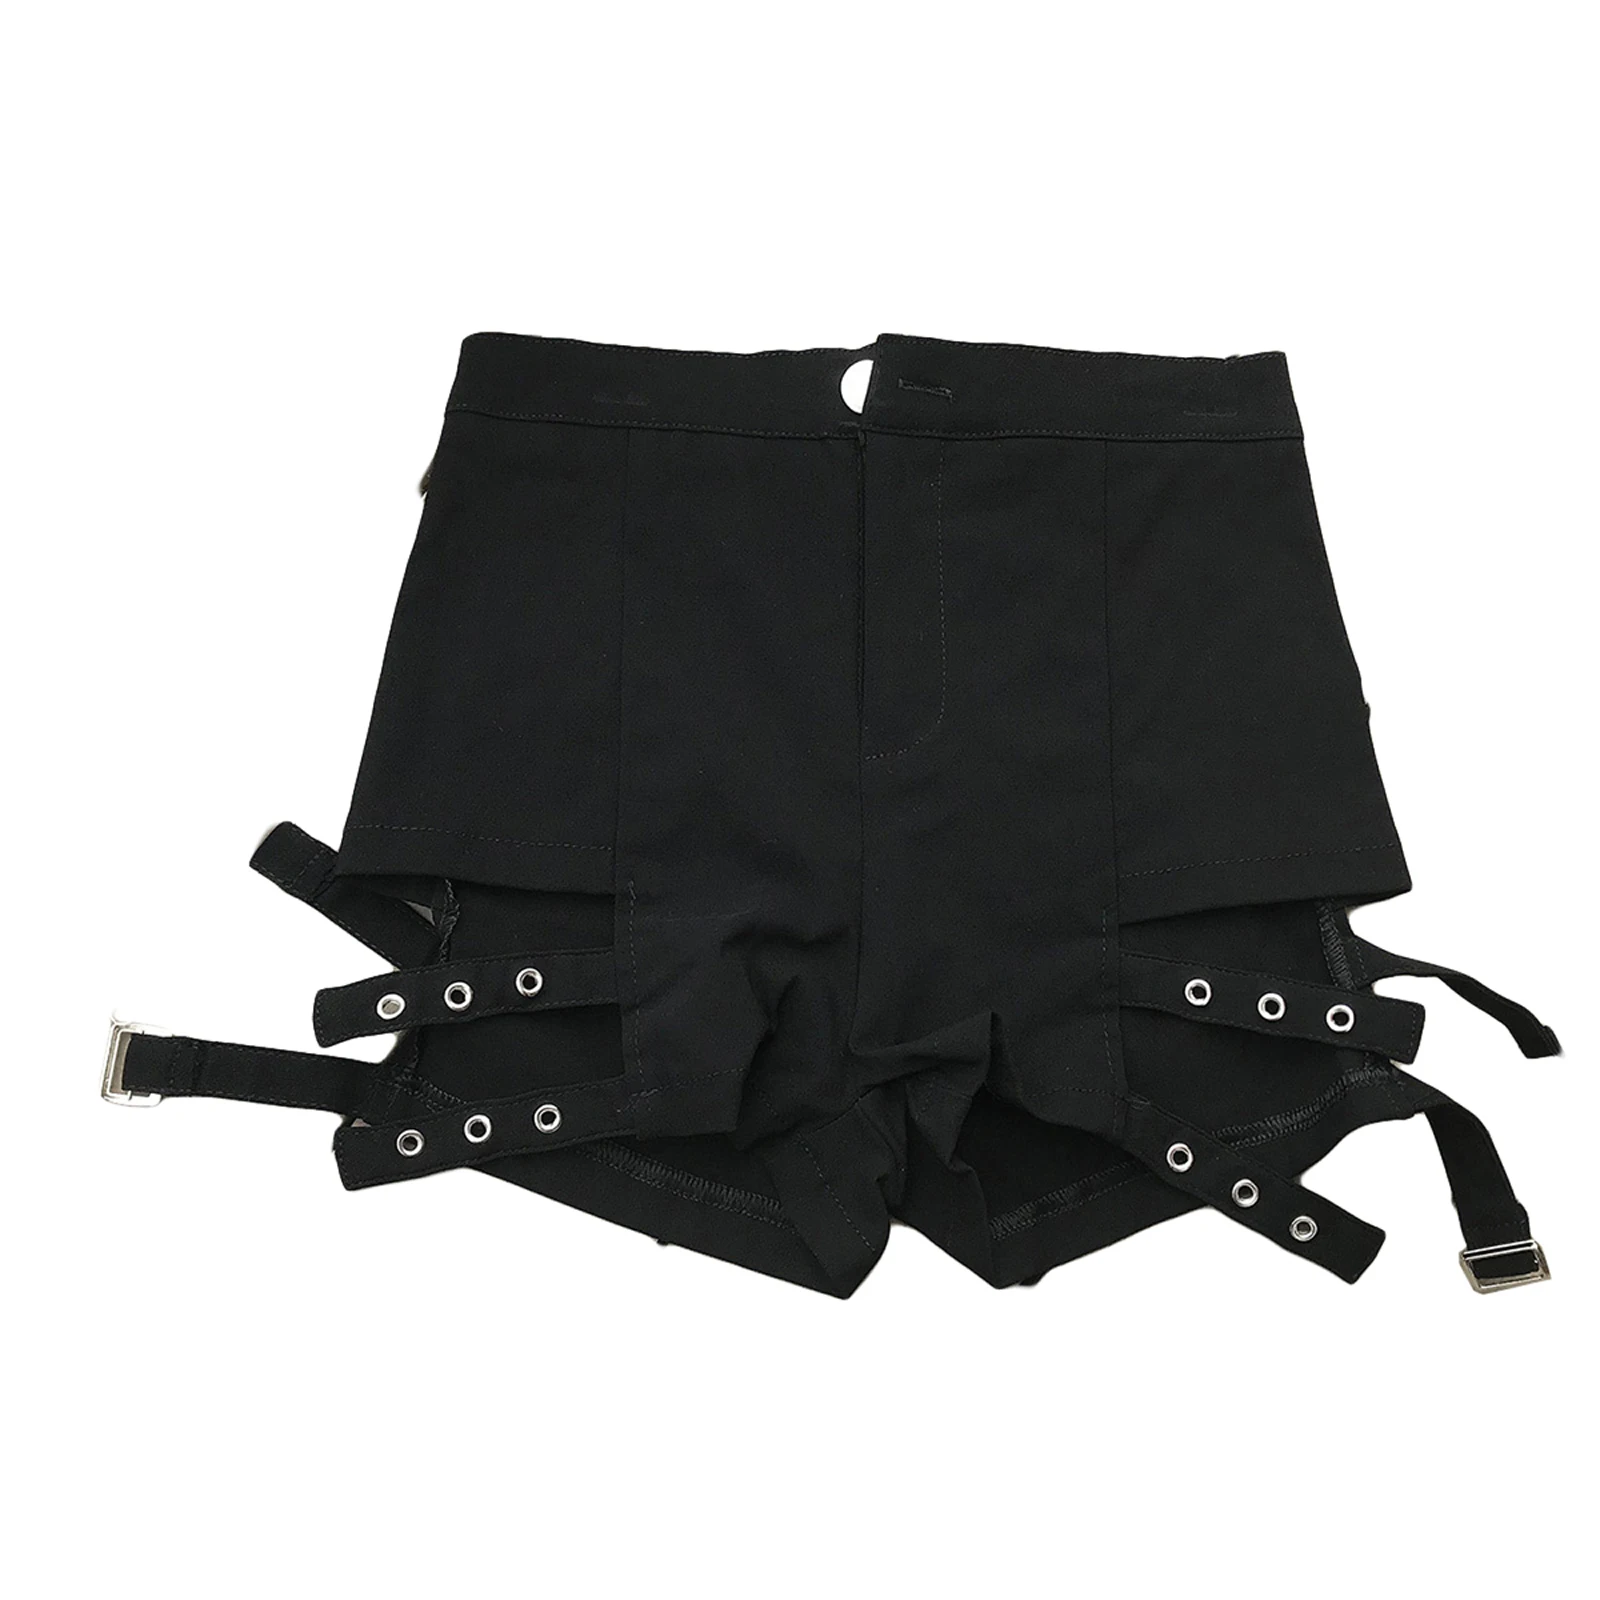 2021 Fashion Design Women Sexy Hollow Out Buckle Belt Shorts Stretch Bodycon Cutout Mini Hot Shorts Party Clubwear Black nike dri fit shorts